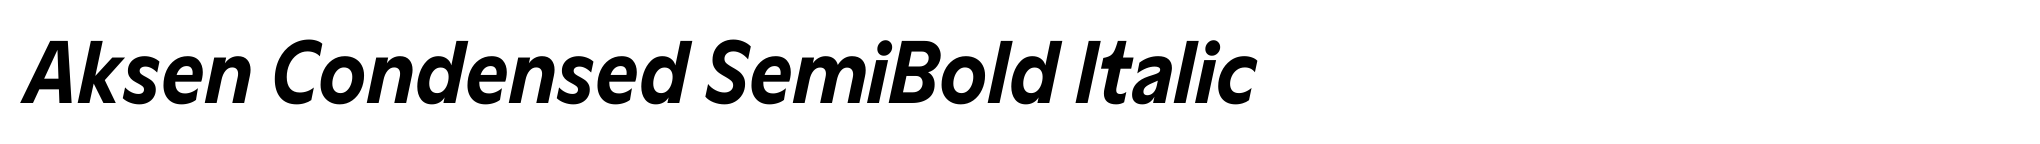 Aksen Condensed SemiBold Italic image